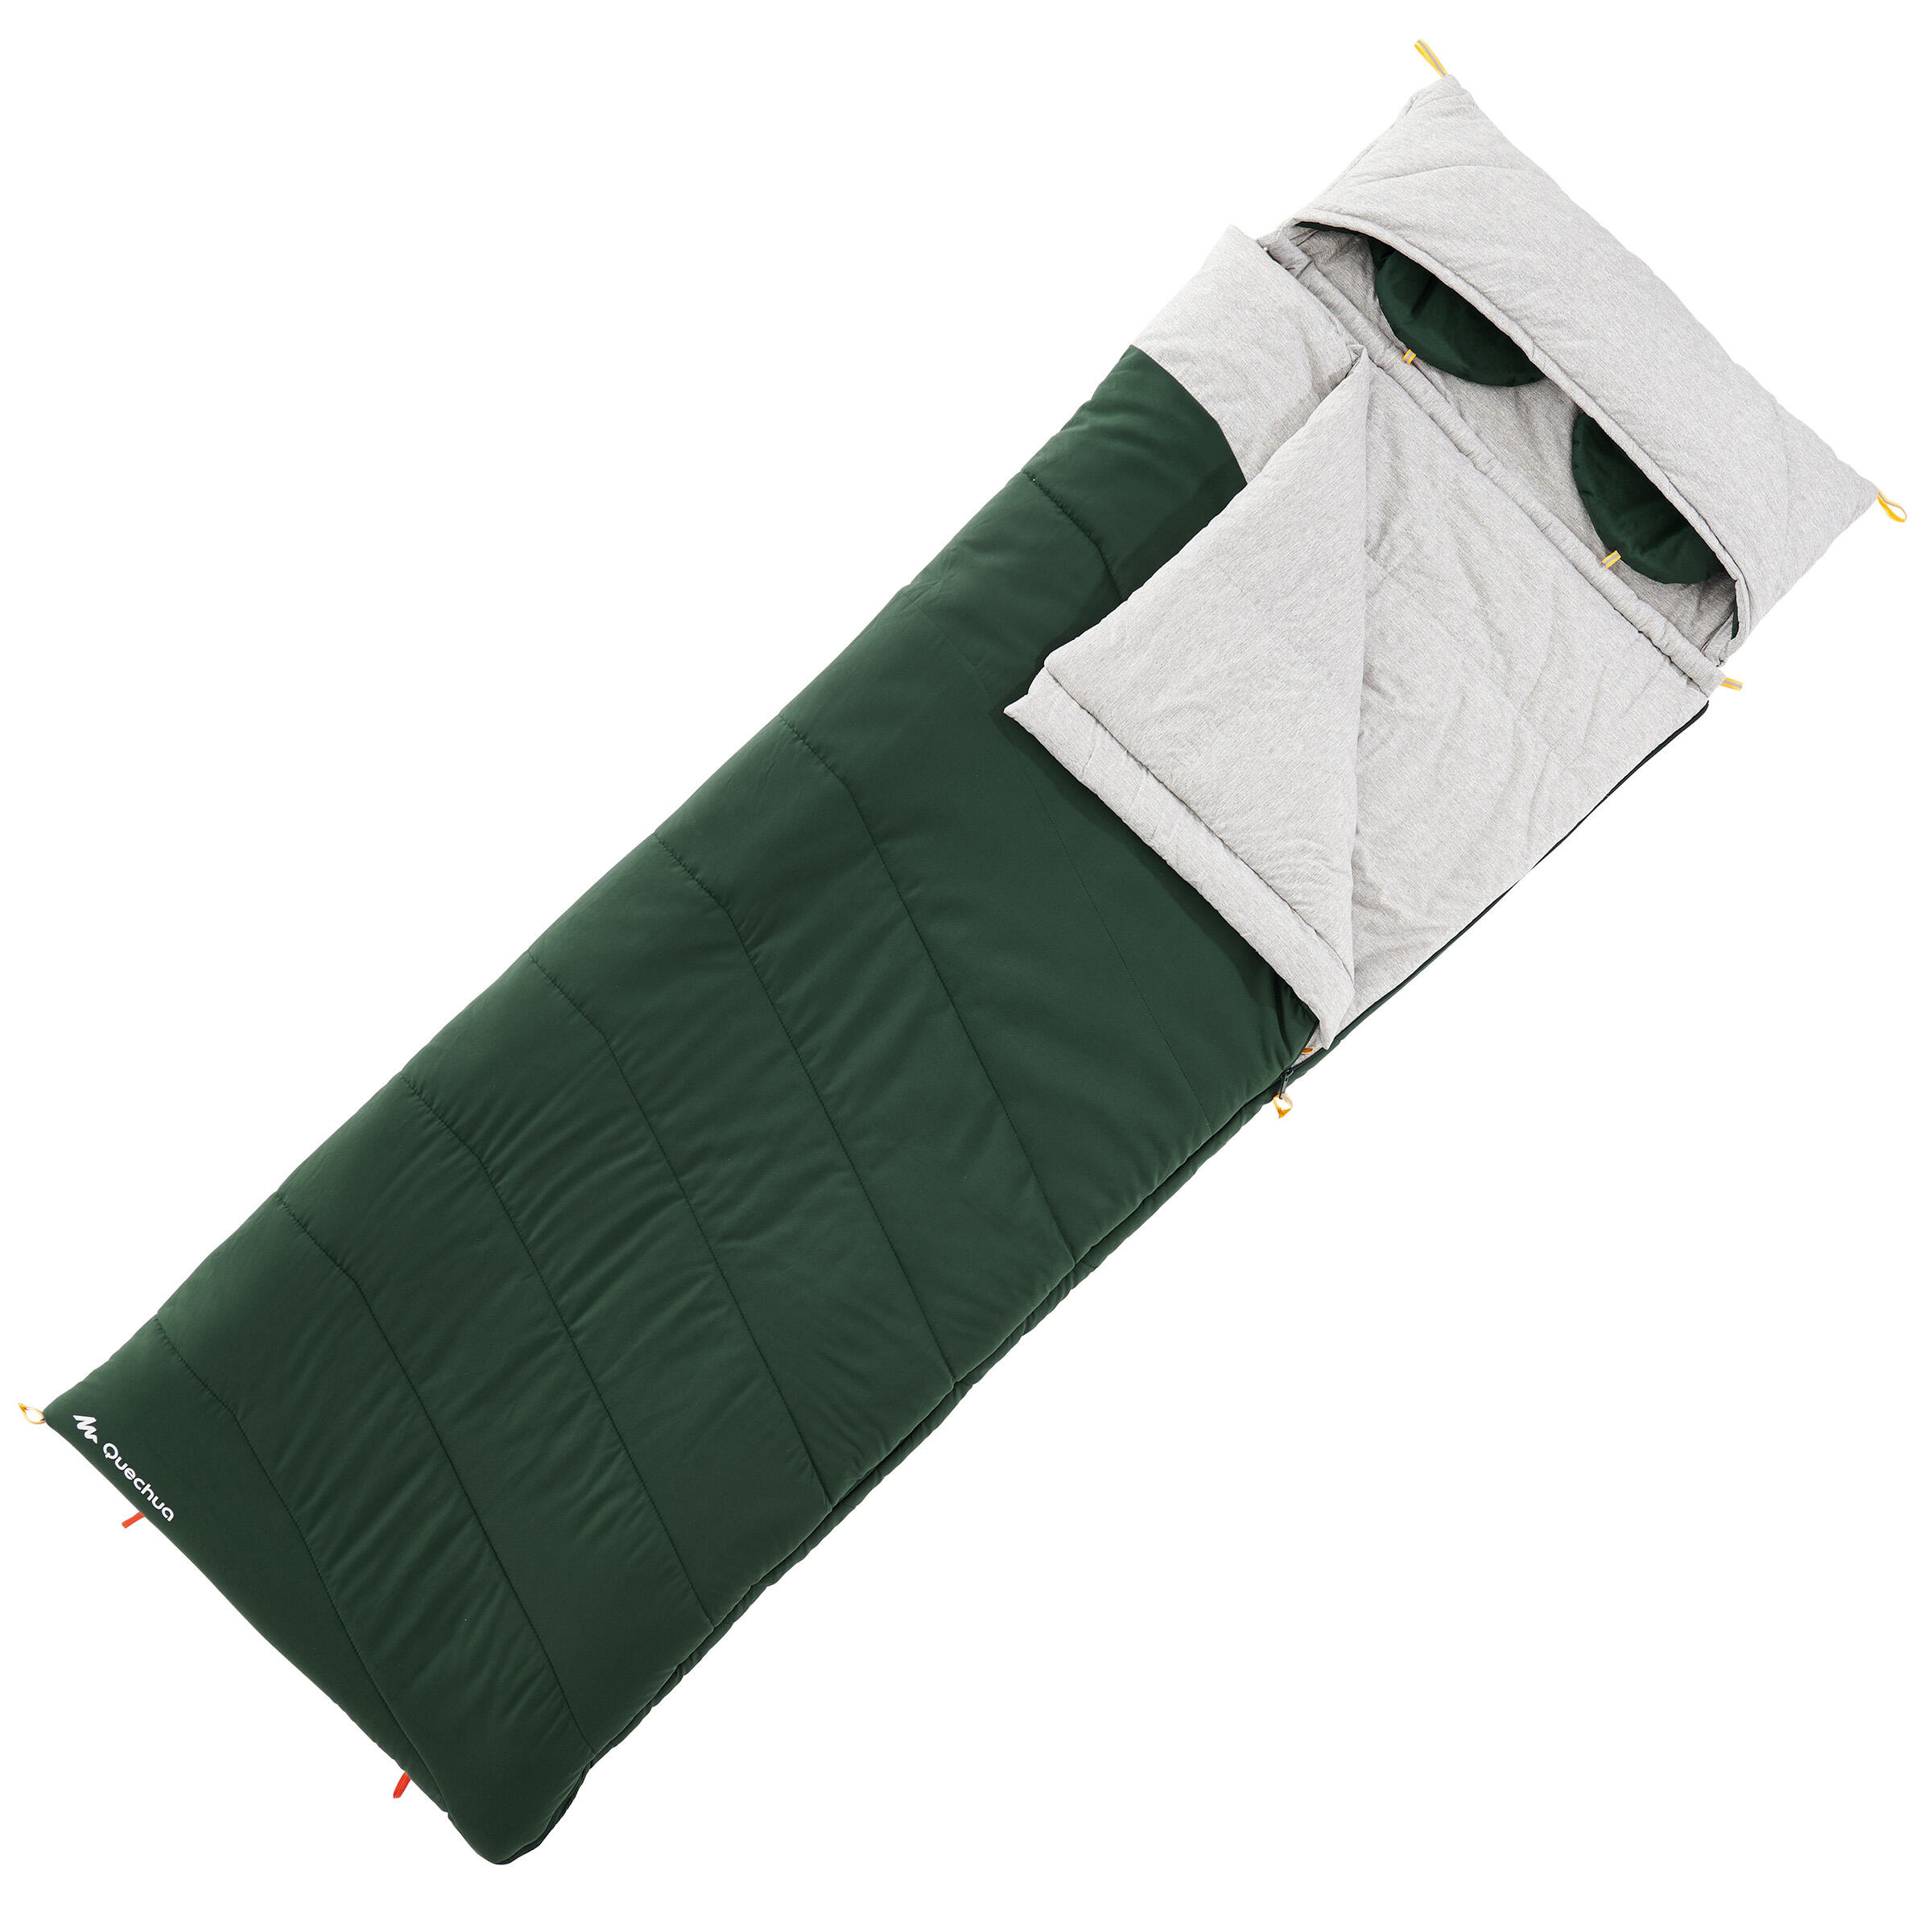 decathlon 4 season sleeping bag